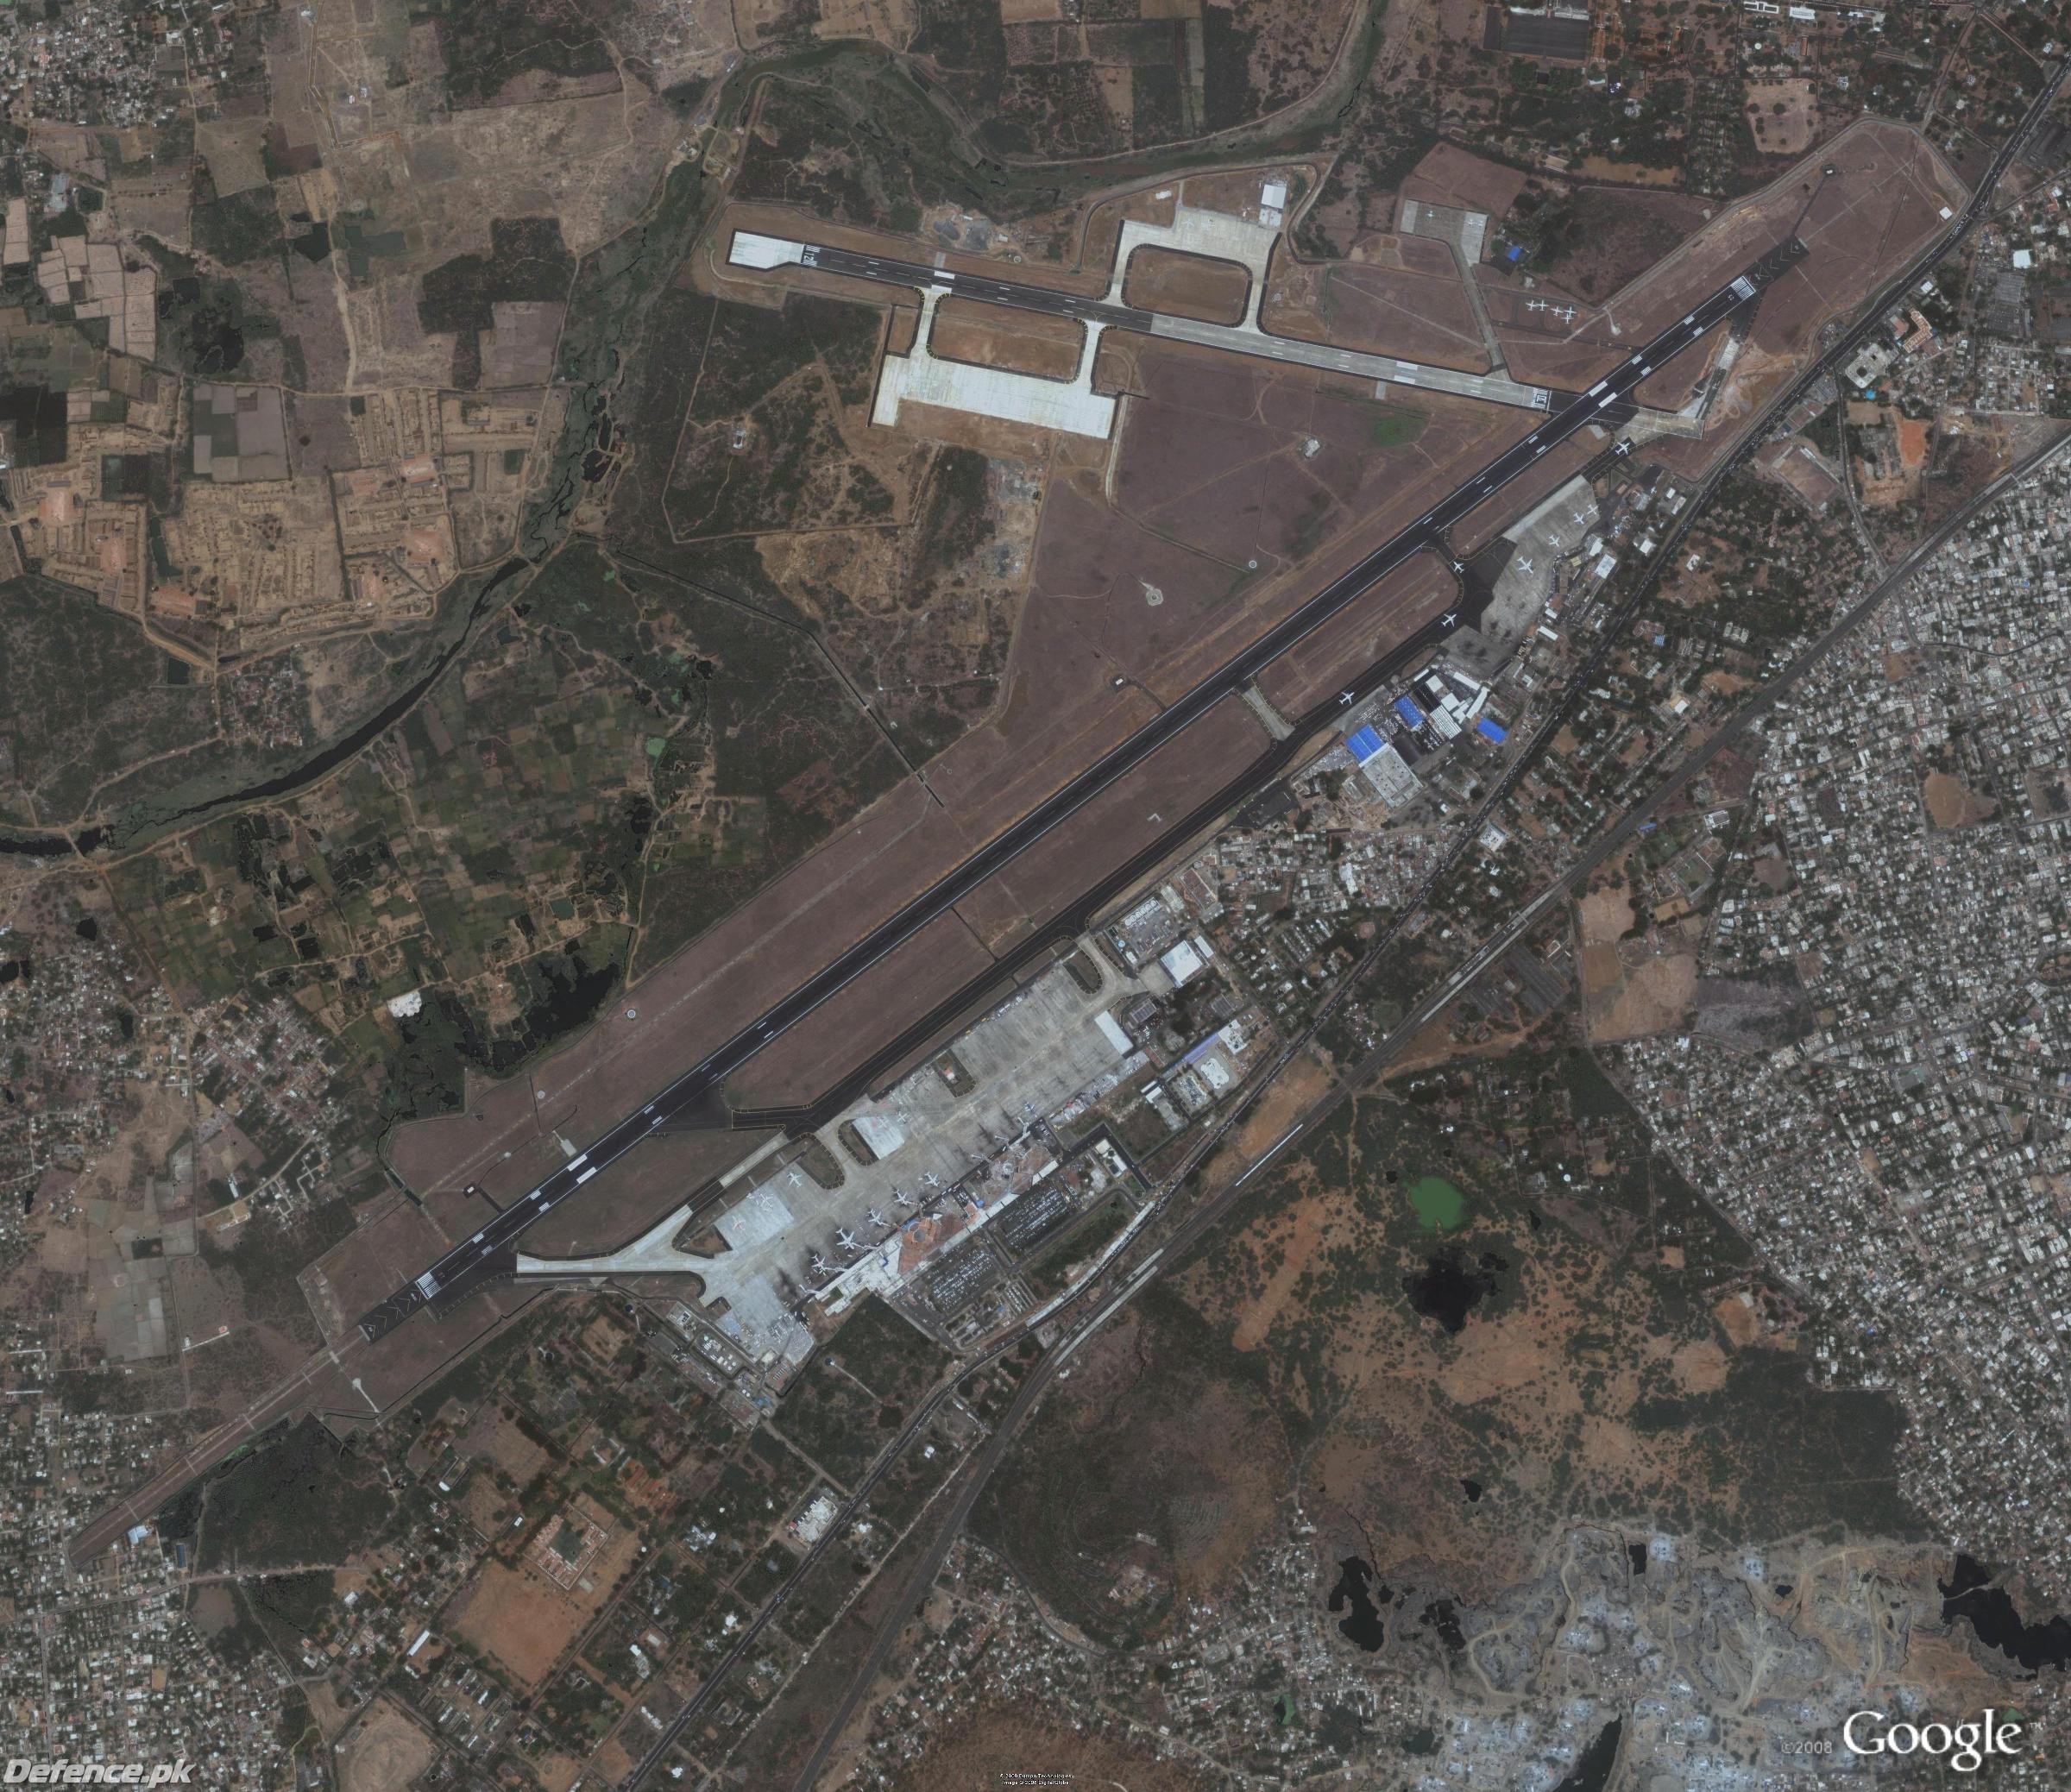 Channei Airbase